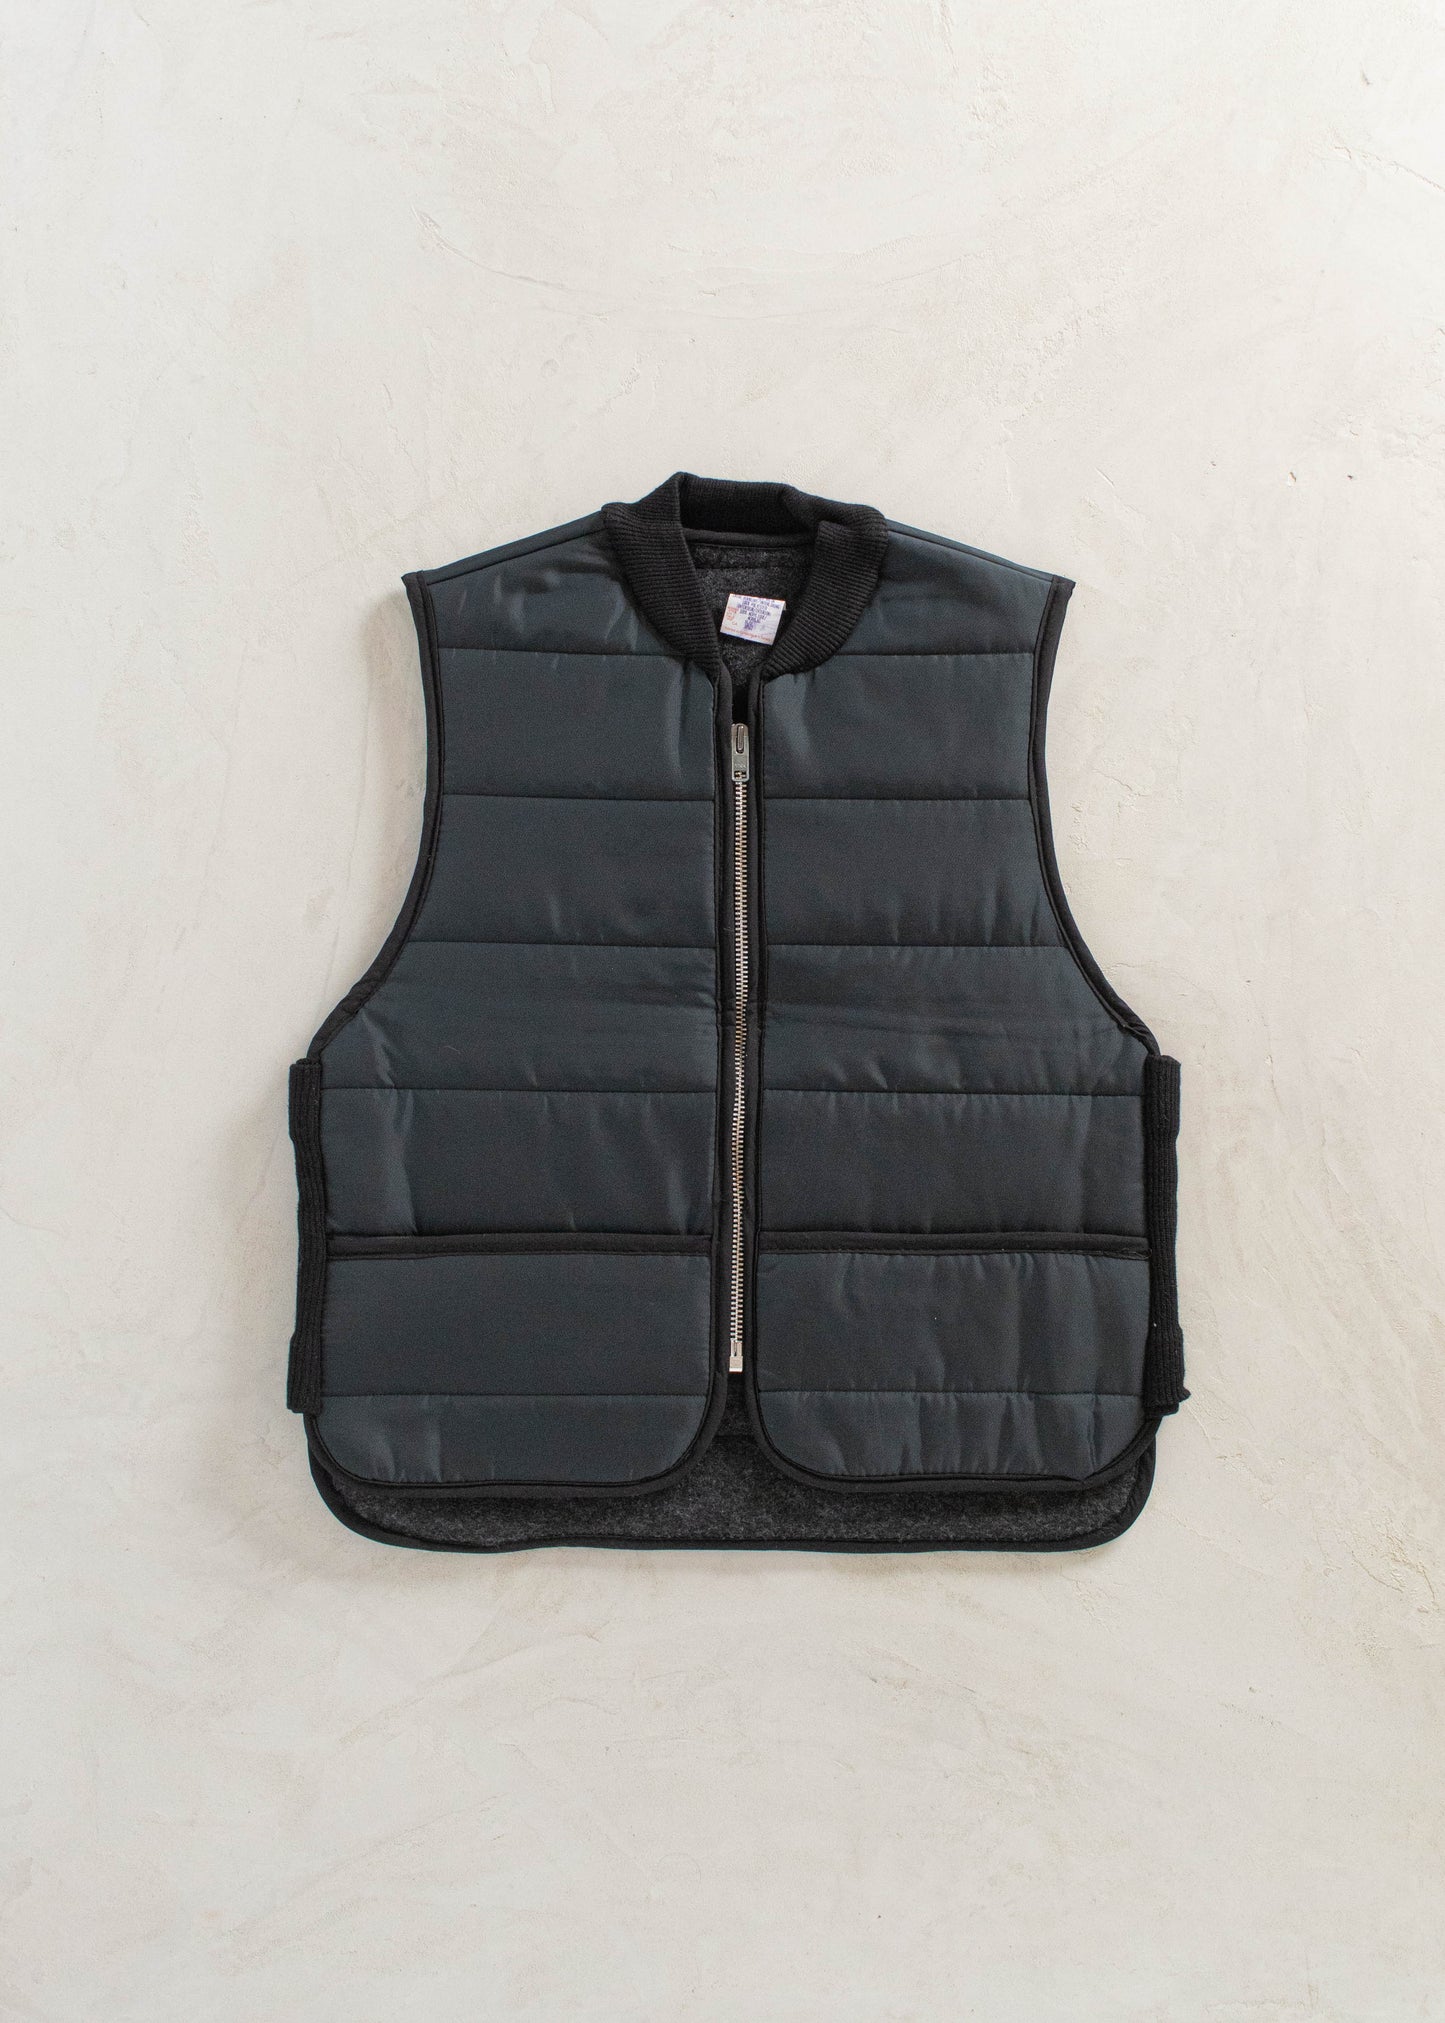 Vintage 1980s Deadstock Workwear Nylon Vest Size M/L